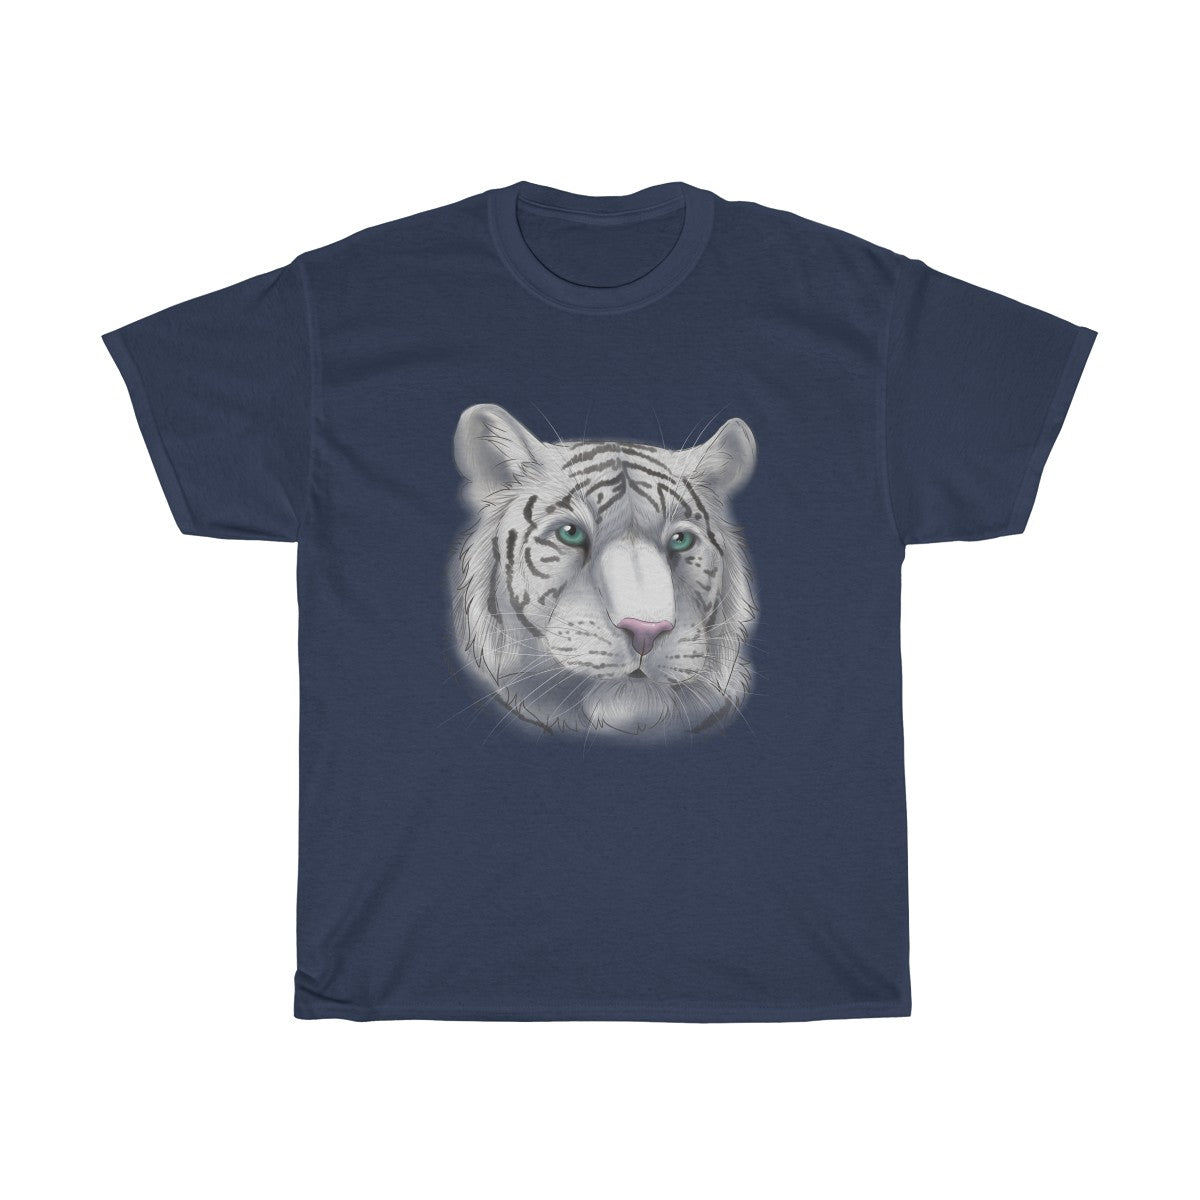 White Tiger - T-Shirt T-Shirt Dire Creatures Navy Blue S 